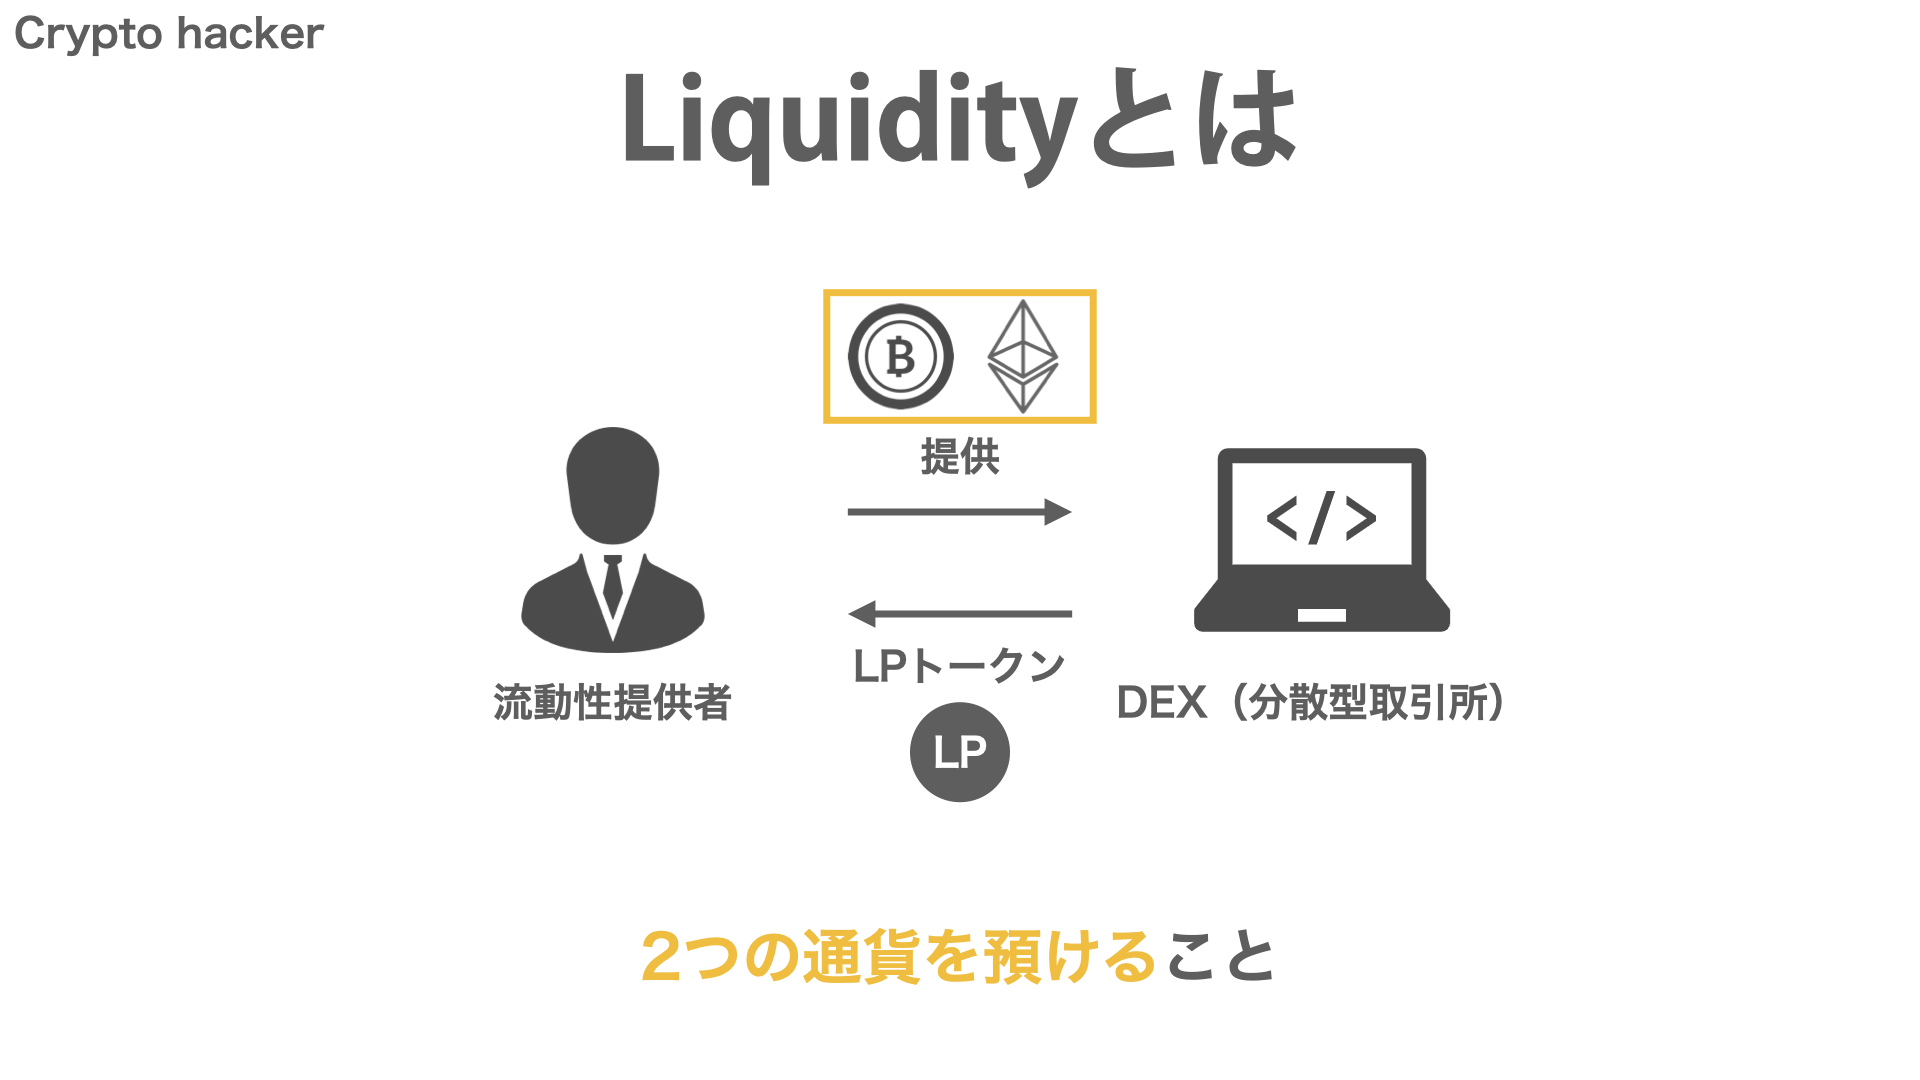 DeFi（分散型金融）　Liquidity